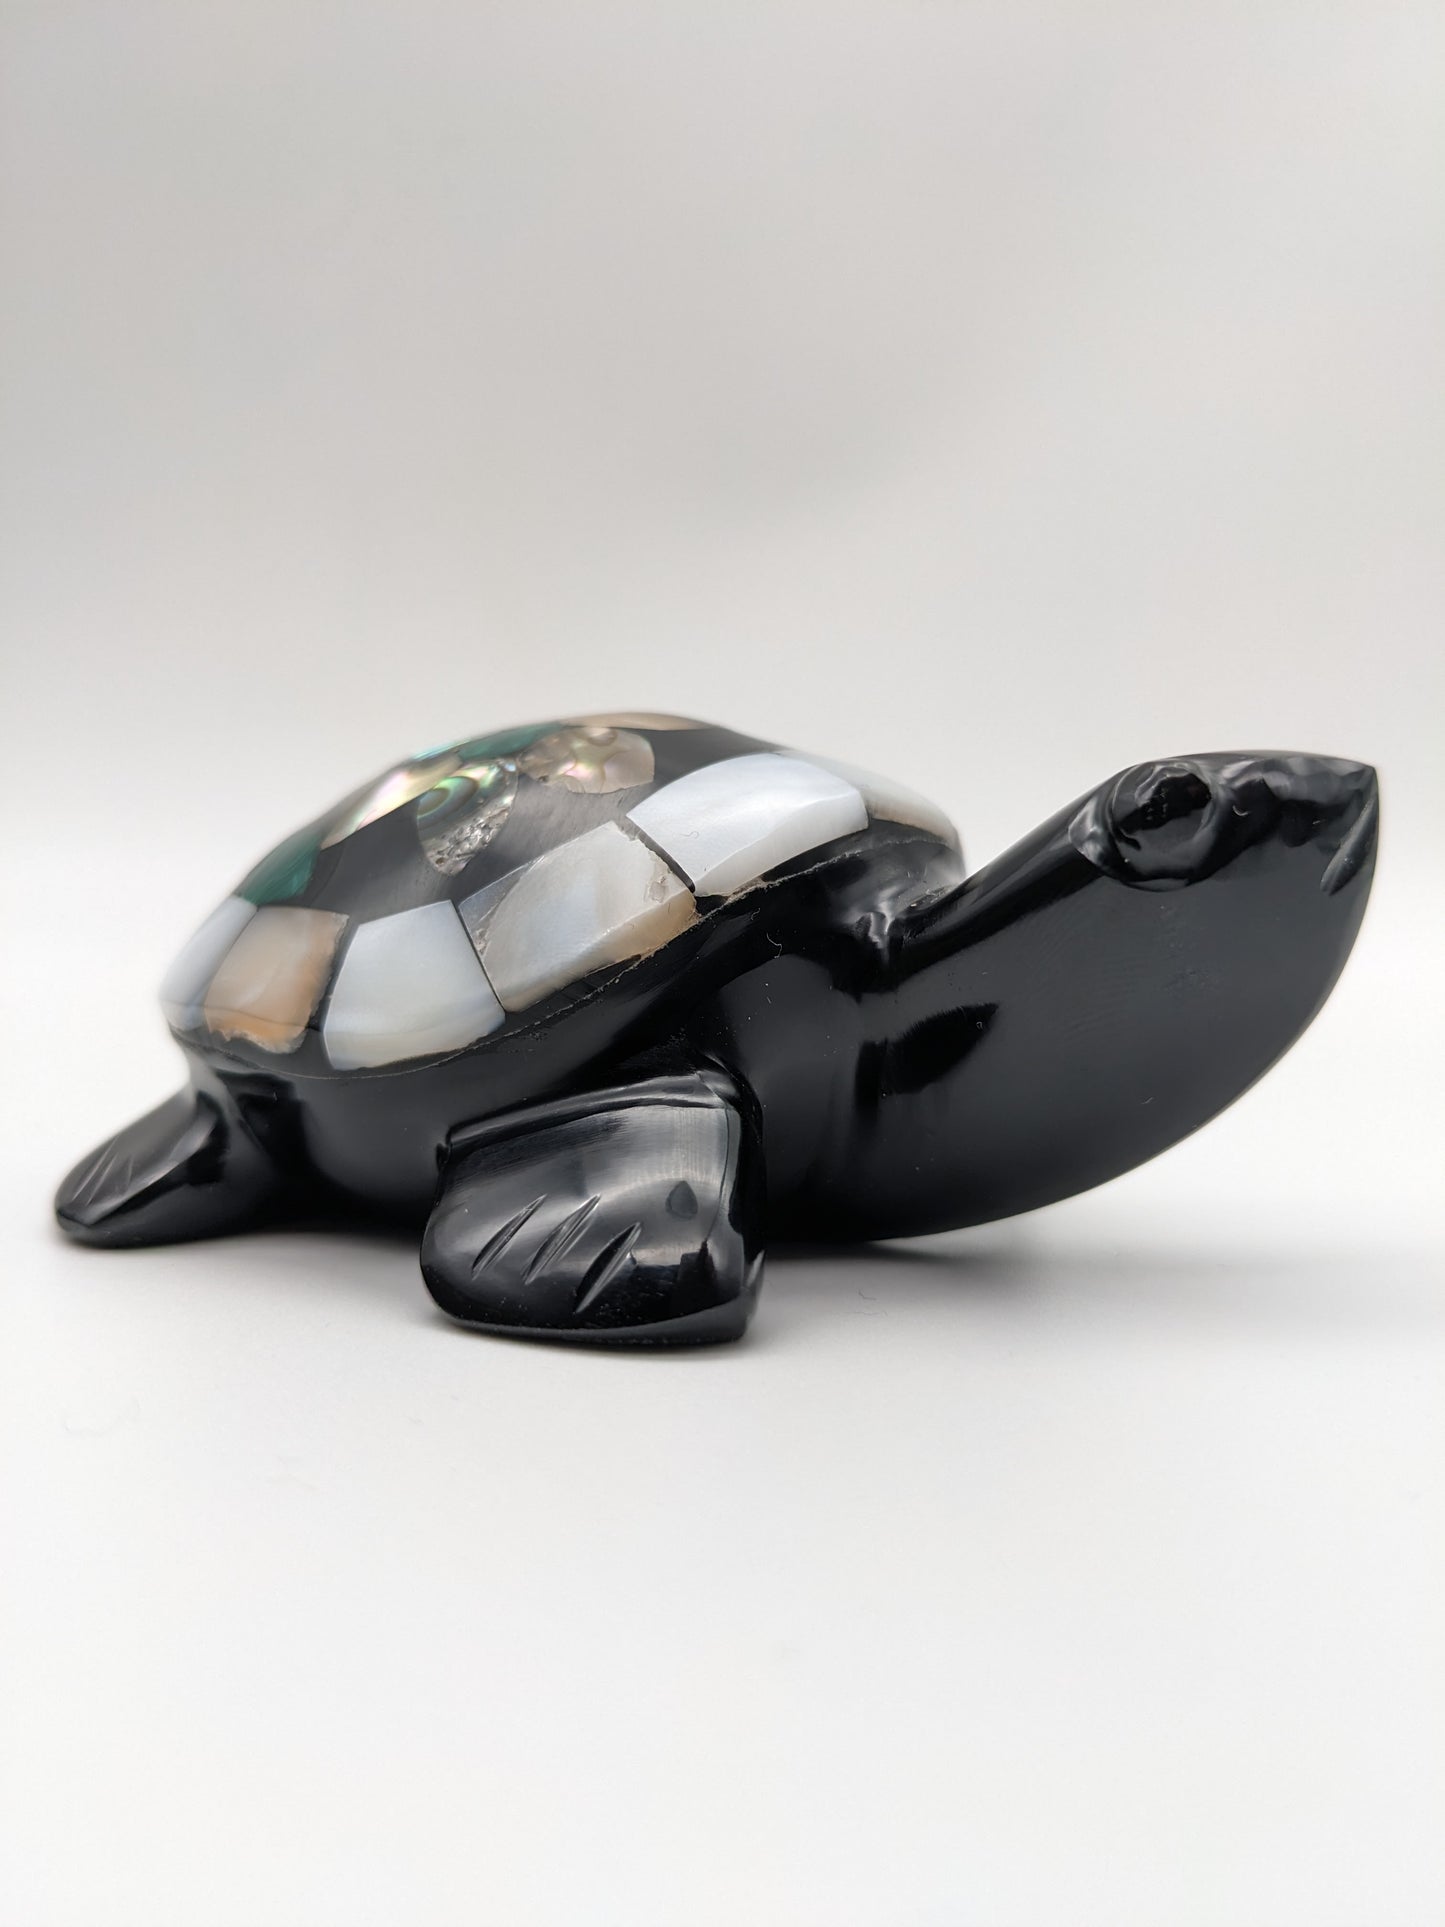 Tortue d’obsidienne incrustée assortie (tortue unique)